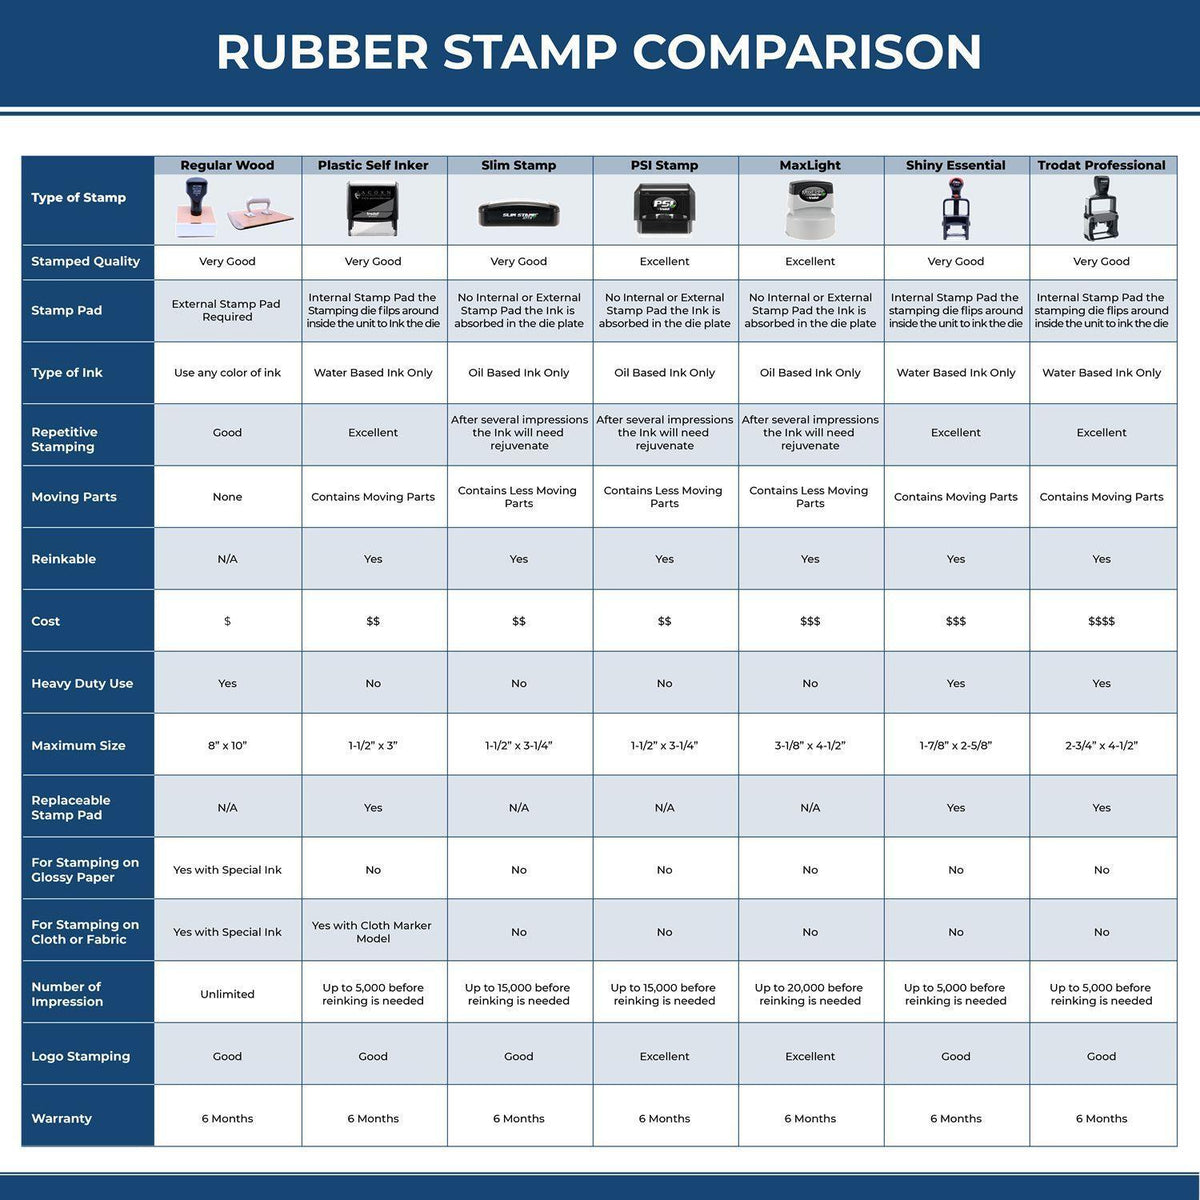 Large Attorney Client Privilege Rubber Stamp 4600R Rubber Stamp Comparison